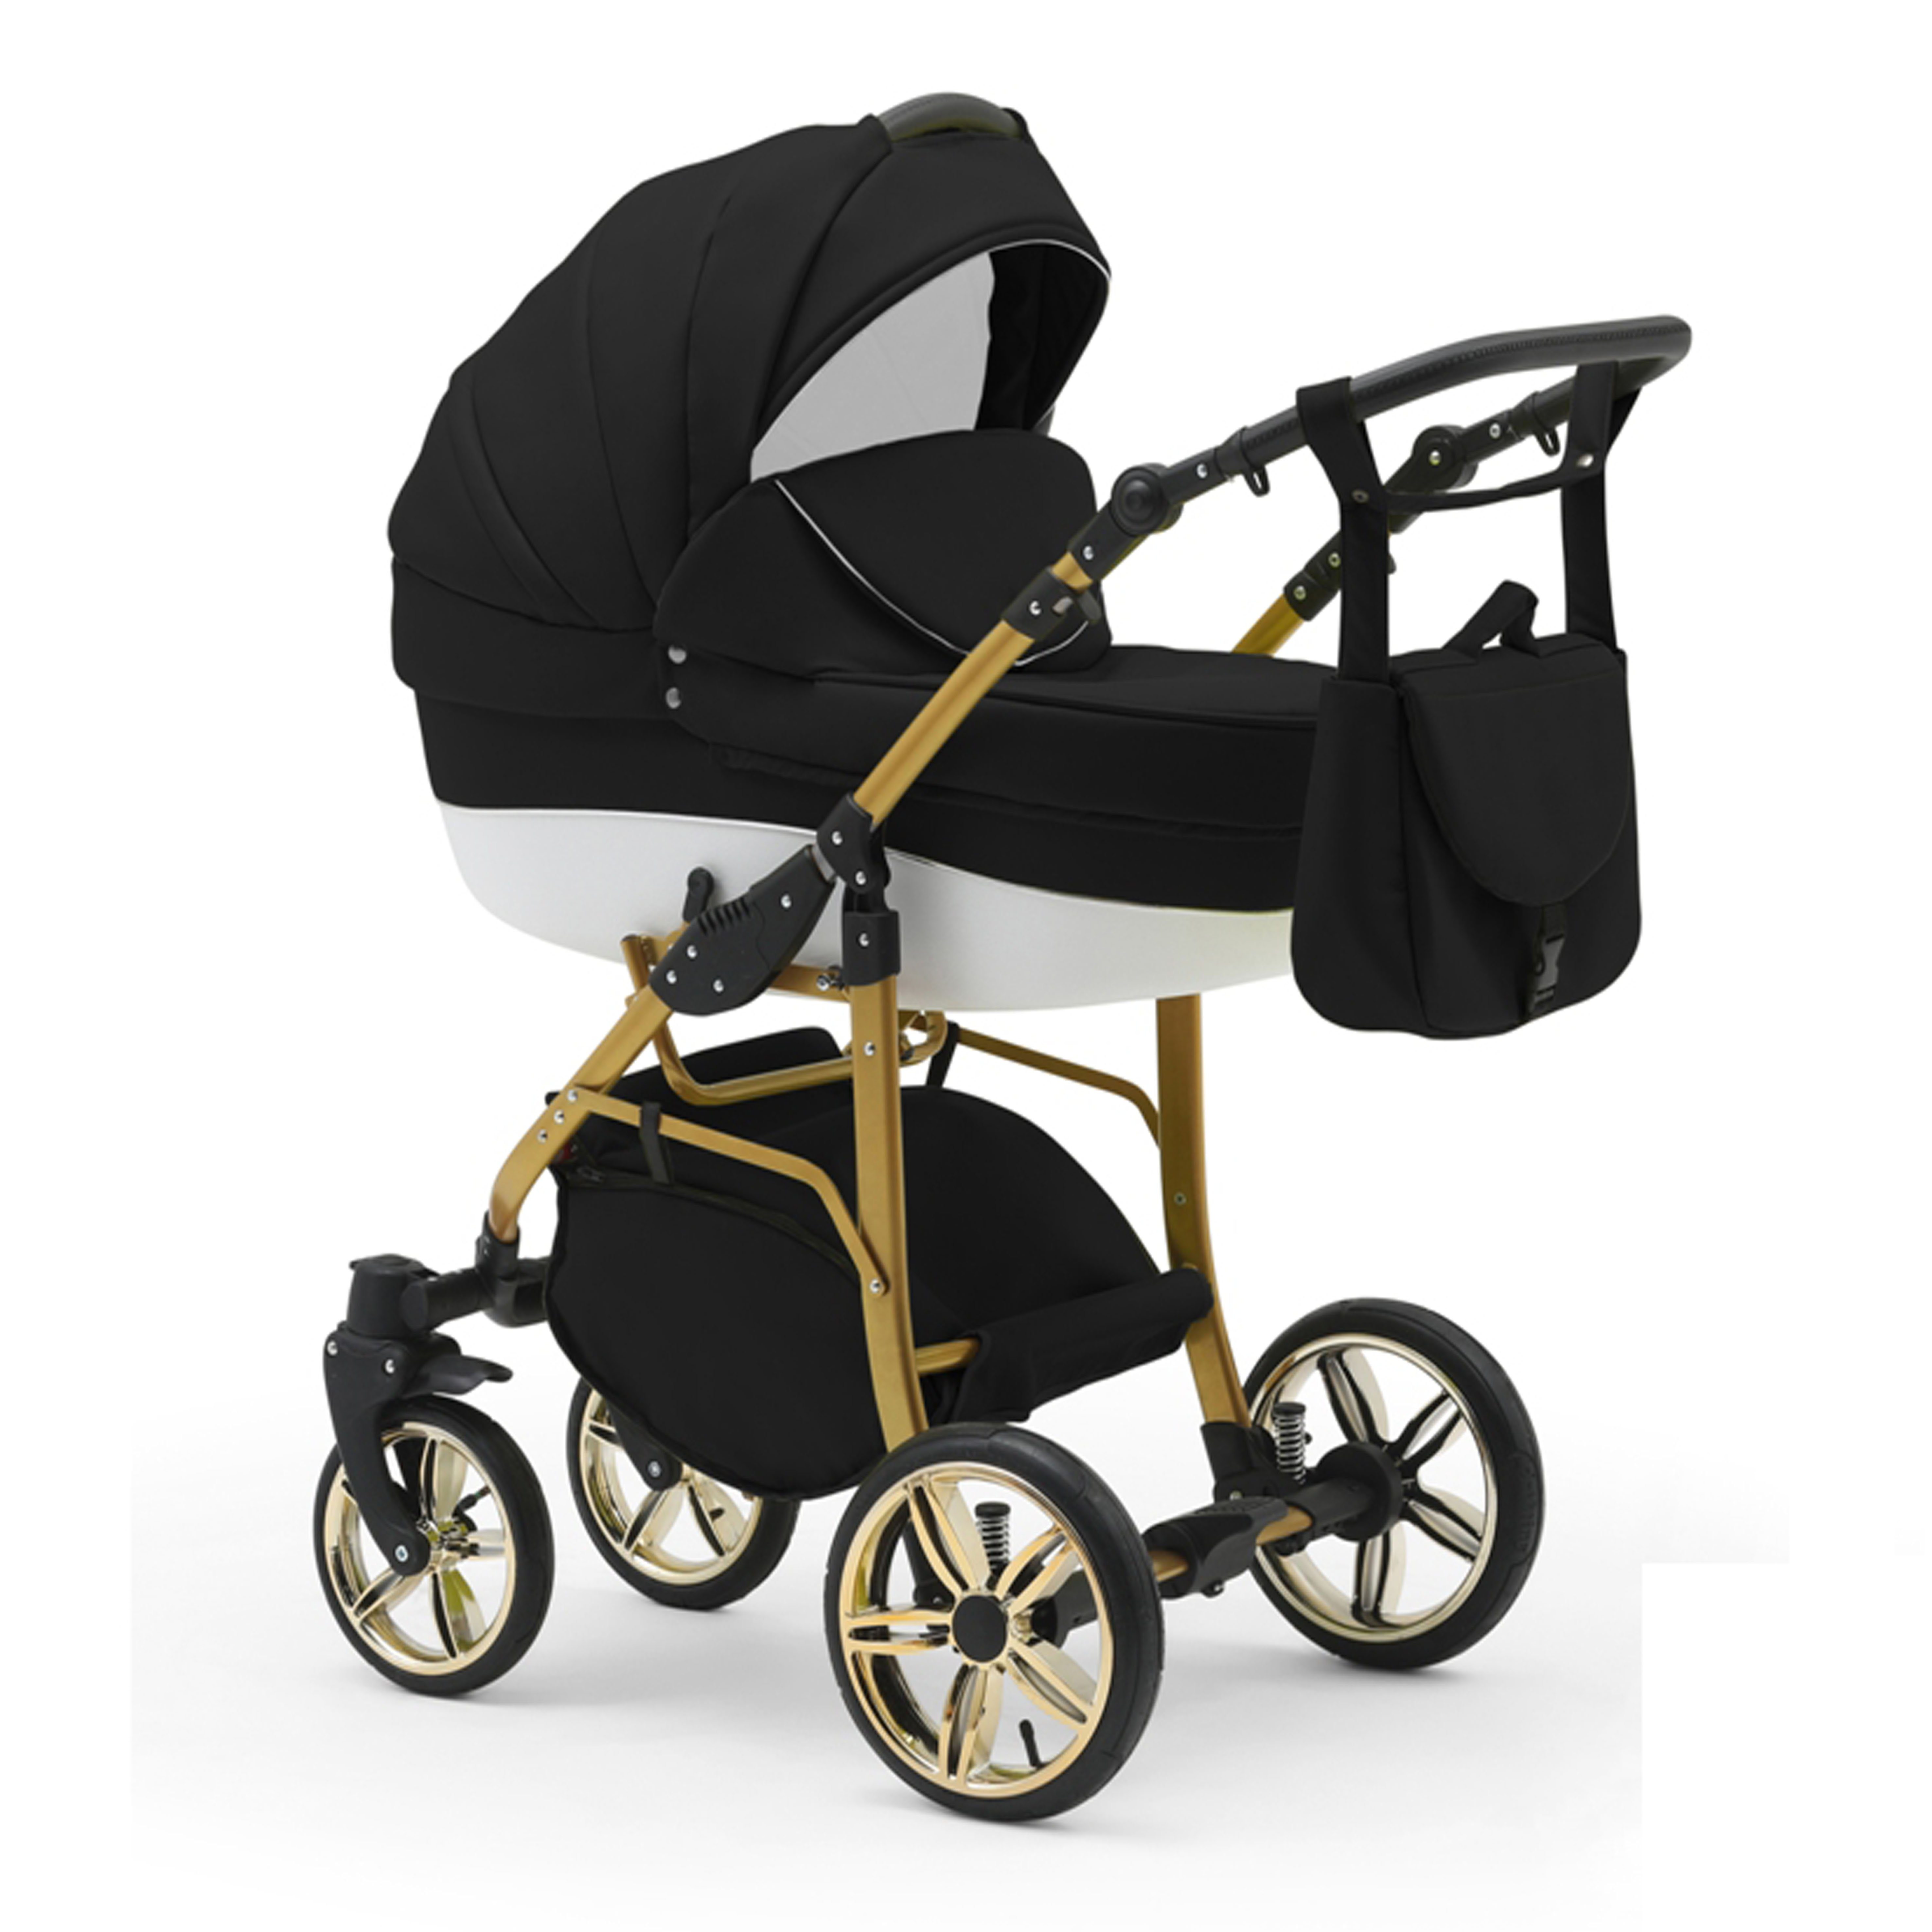 babies-on-wheels Kombi-Kinderwagen 2 in 1 Kinderwagen-Set 13 46 Gold Farben ECO - Cosmo - Schwarz-Weiß in Teile